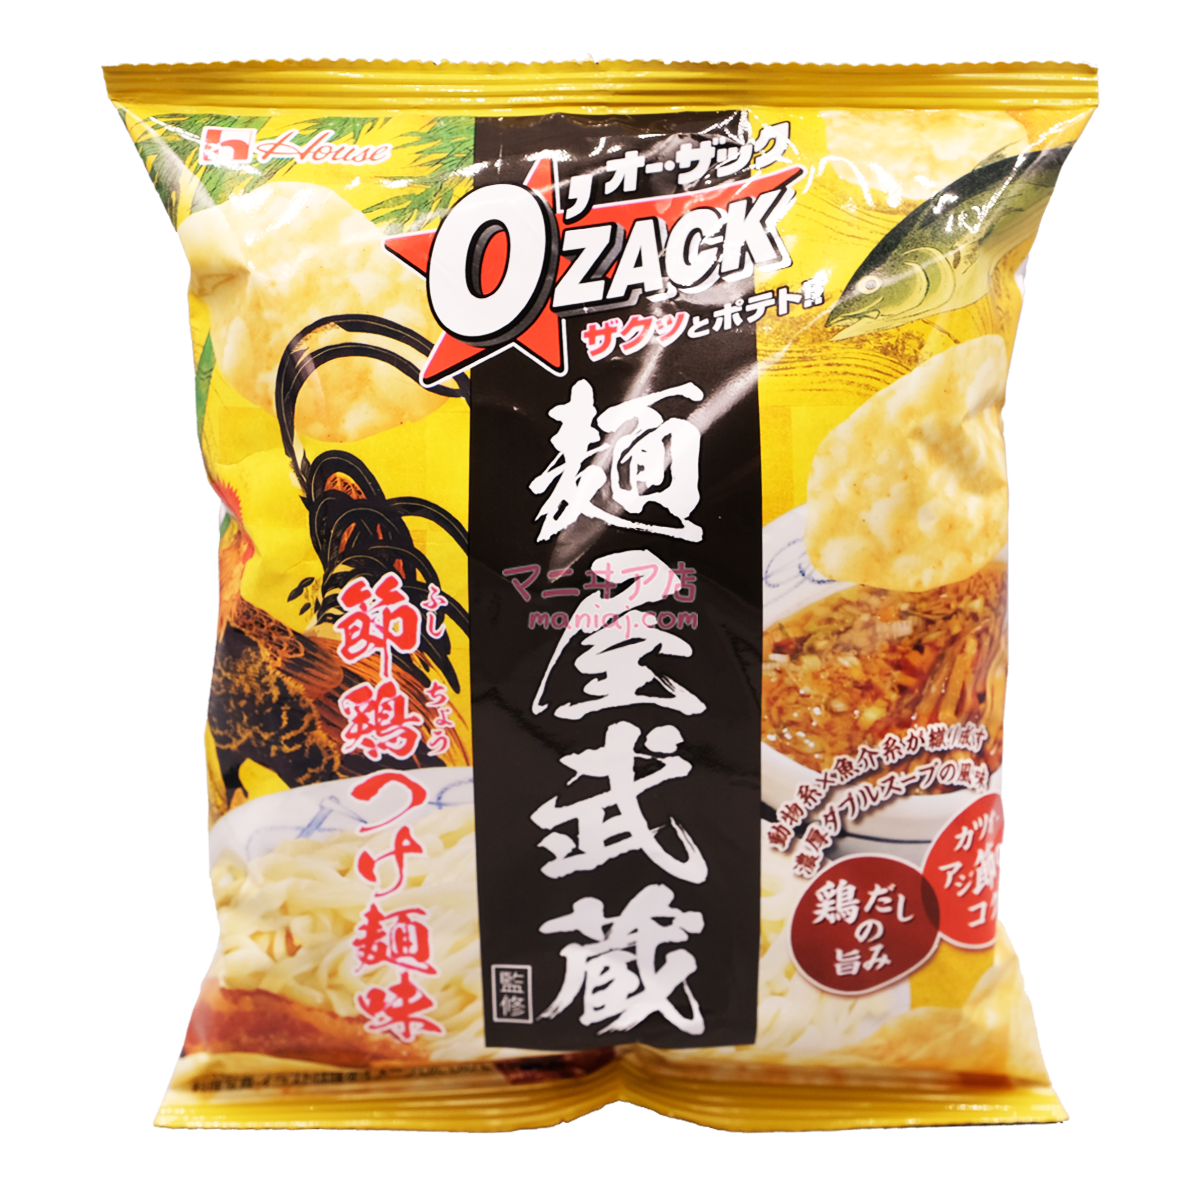 Ozack's Day Chicken Dip Noodle Potato Chips